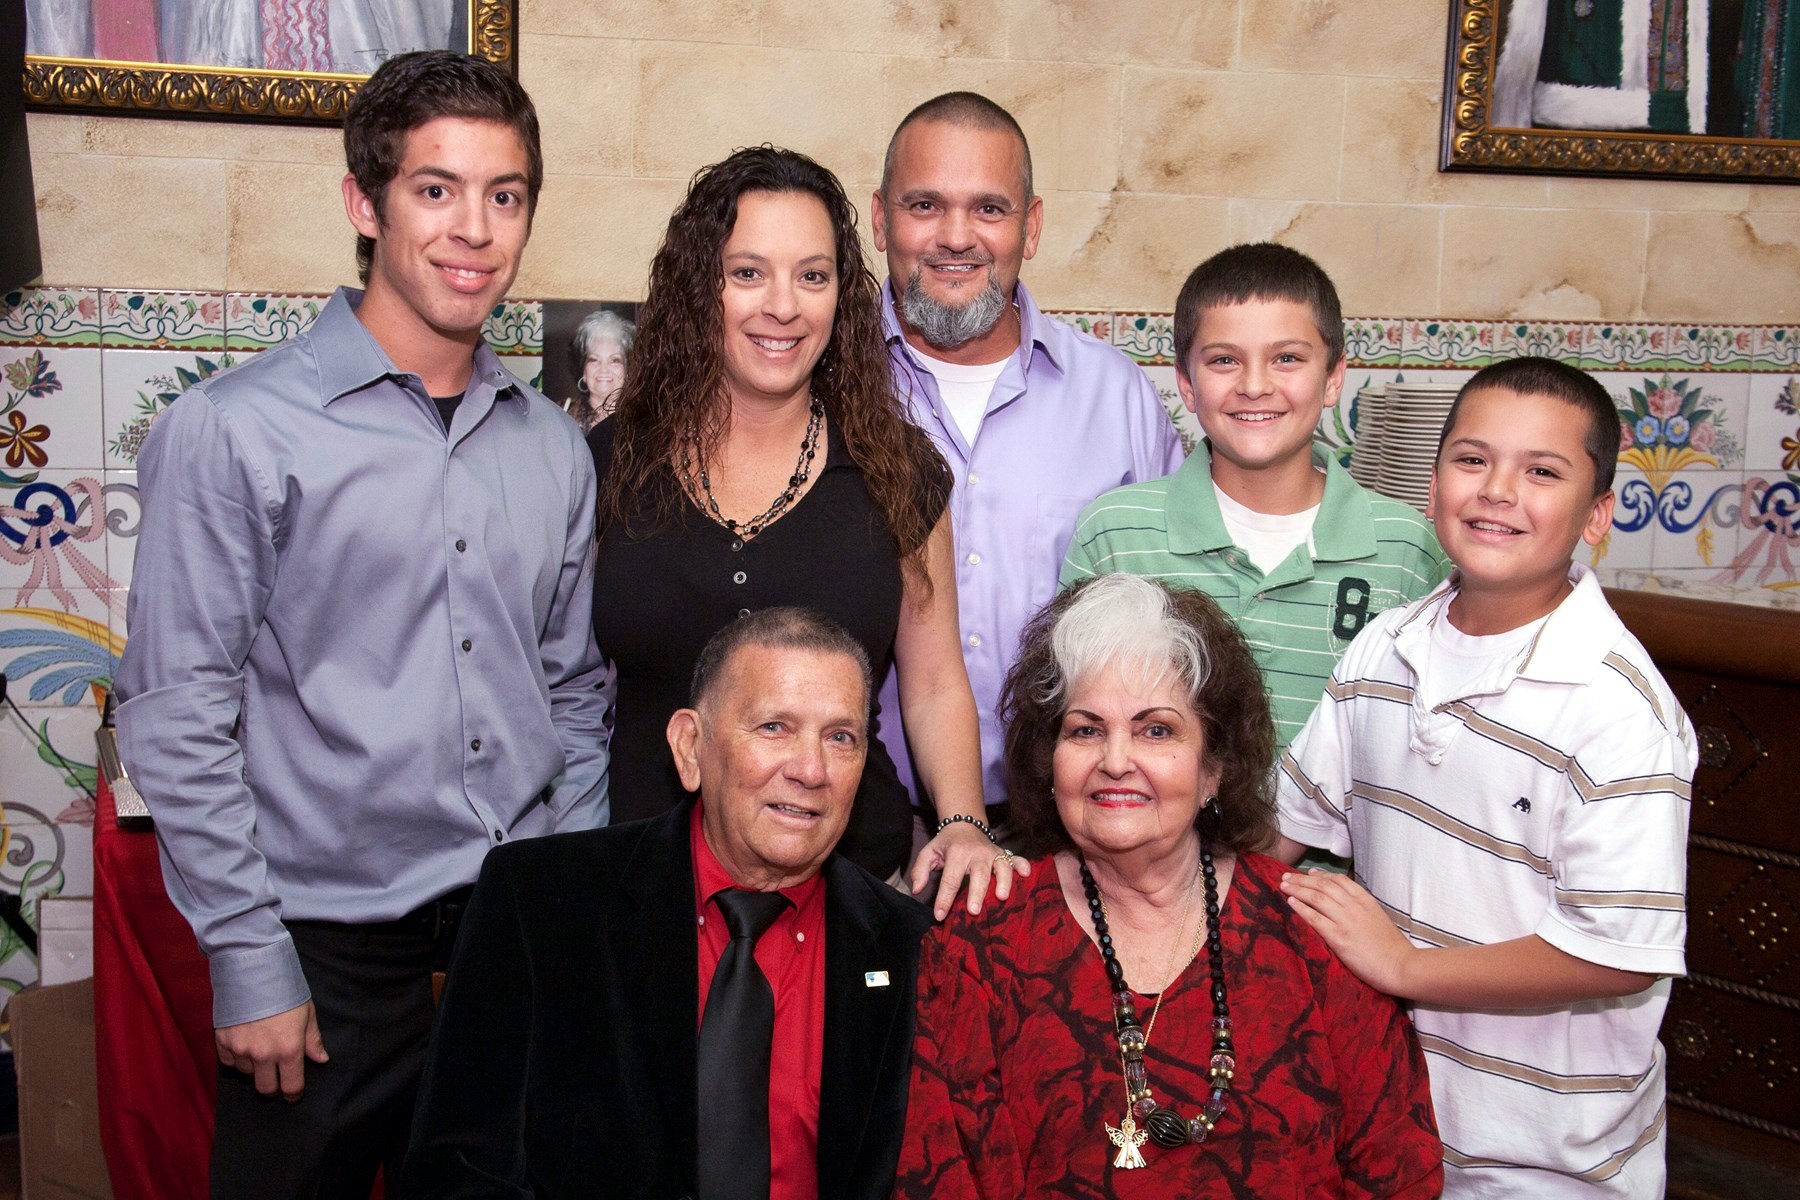 Hillsborough County - Hillsborough County Honors Saladino Family